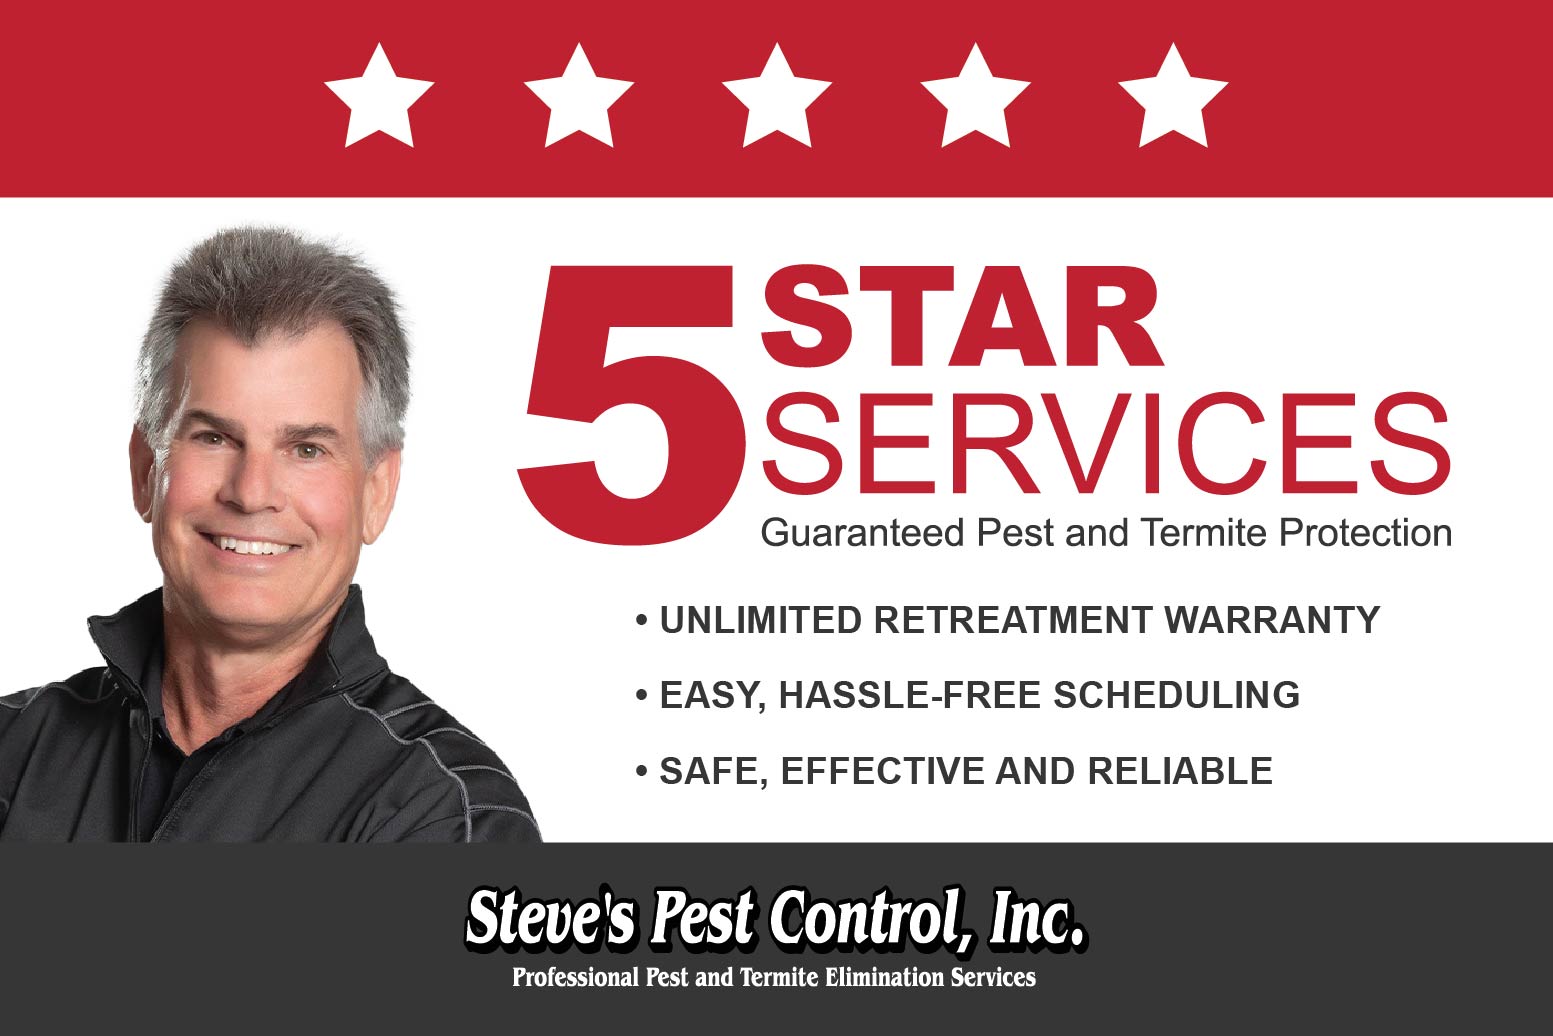 Photo detailing the numerous advantages of 5 Star Services